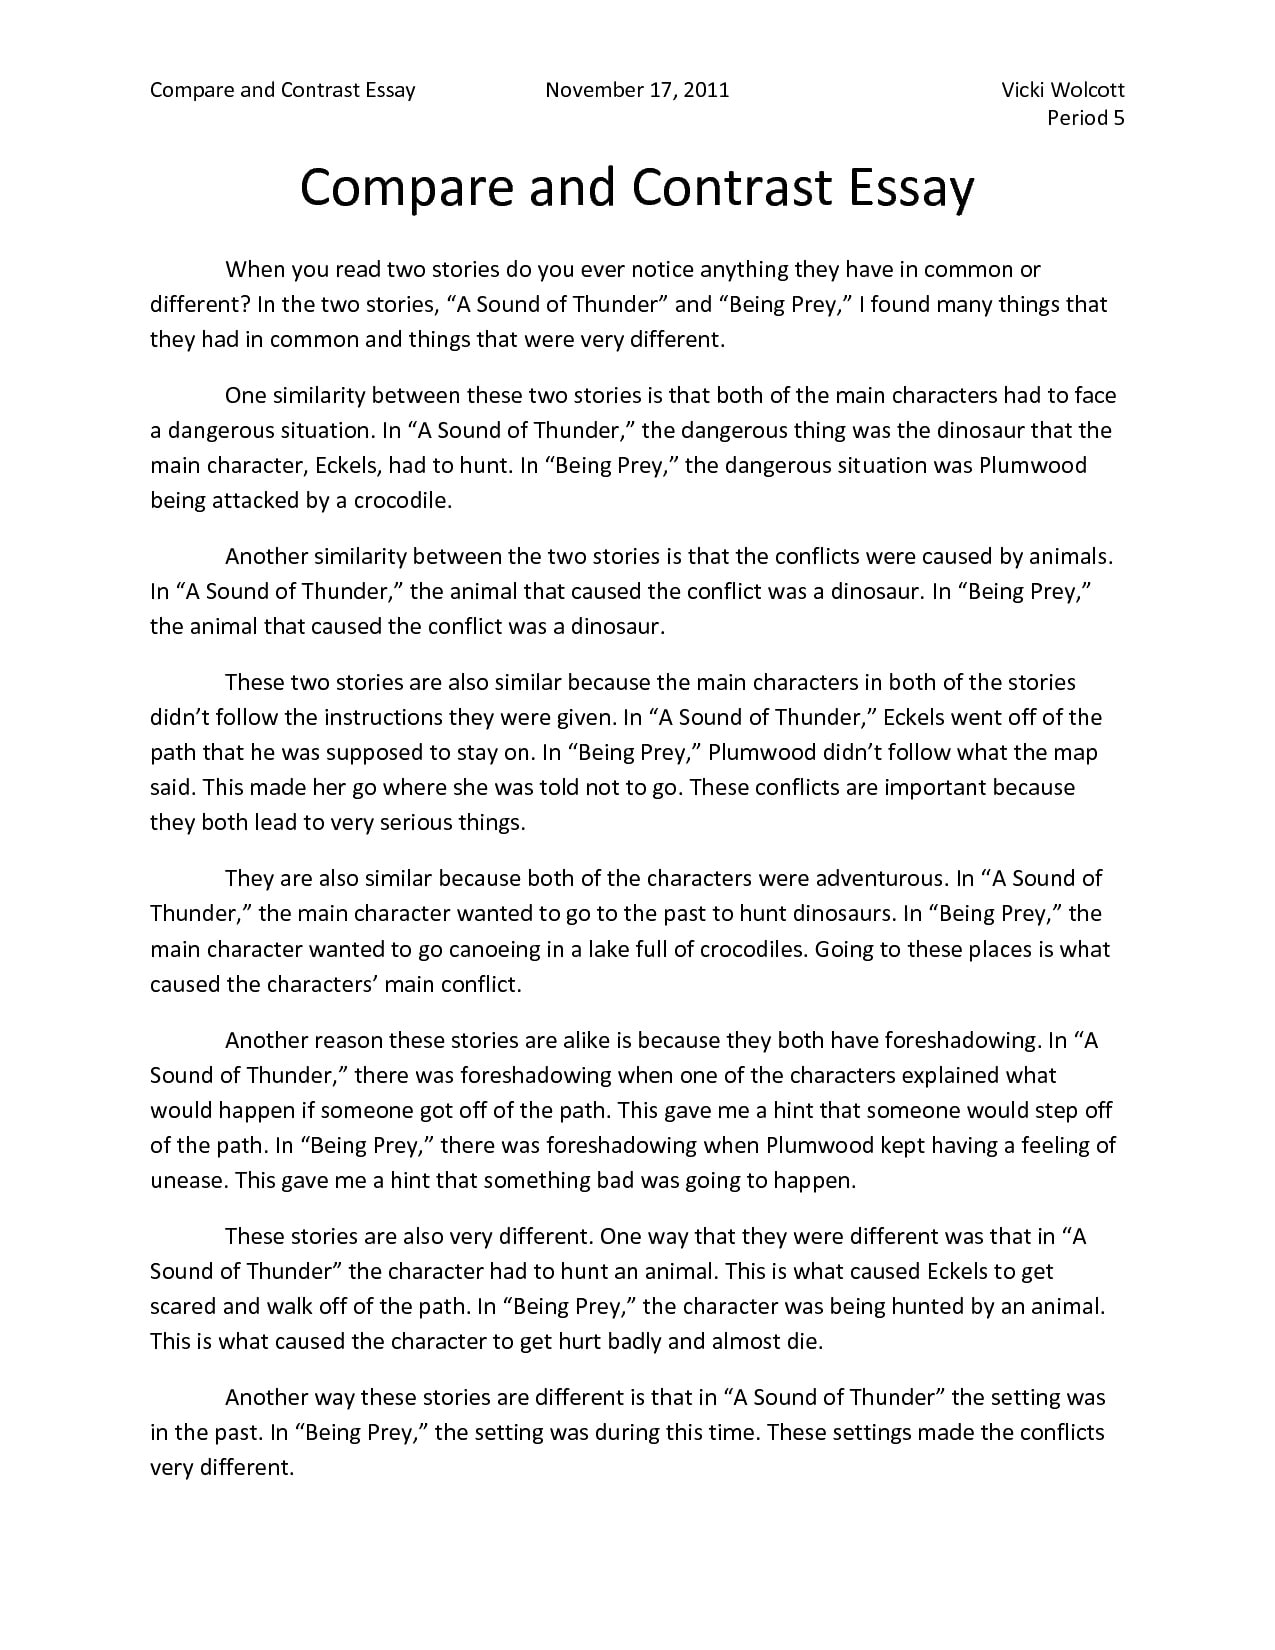 Example comparison essay